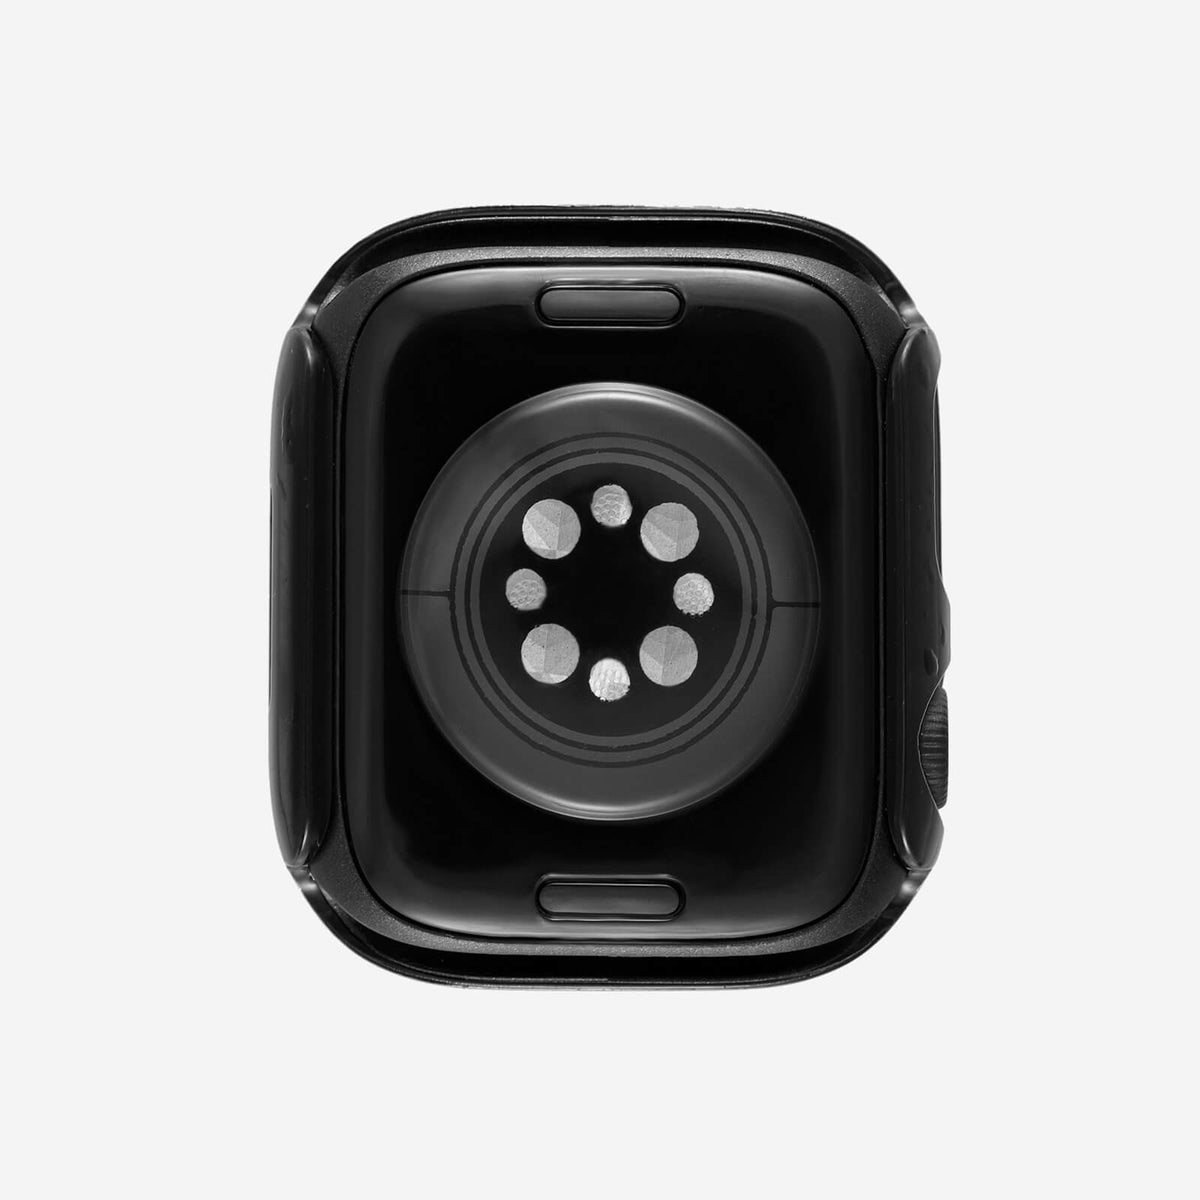 Apple Watch Double Halo Crystal Bumper Case - Black